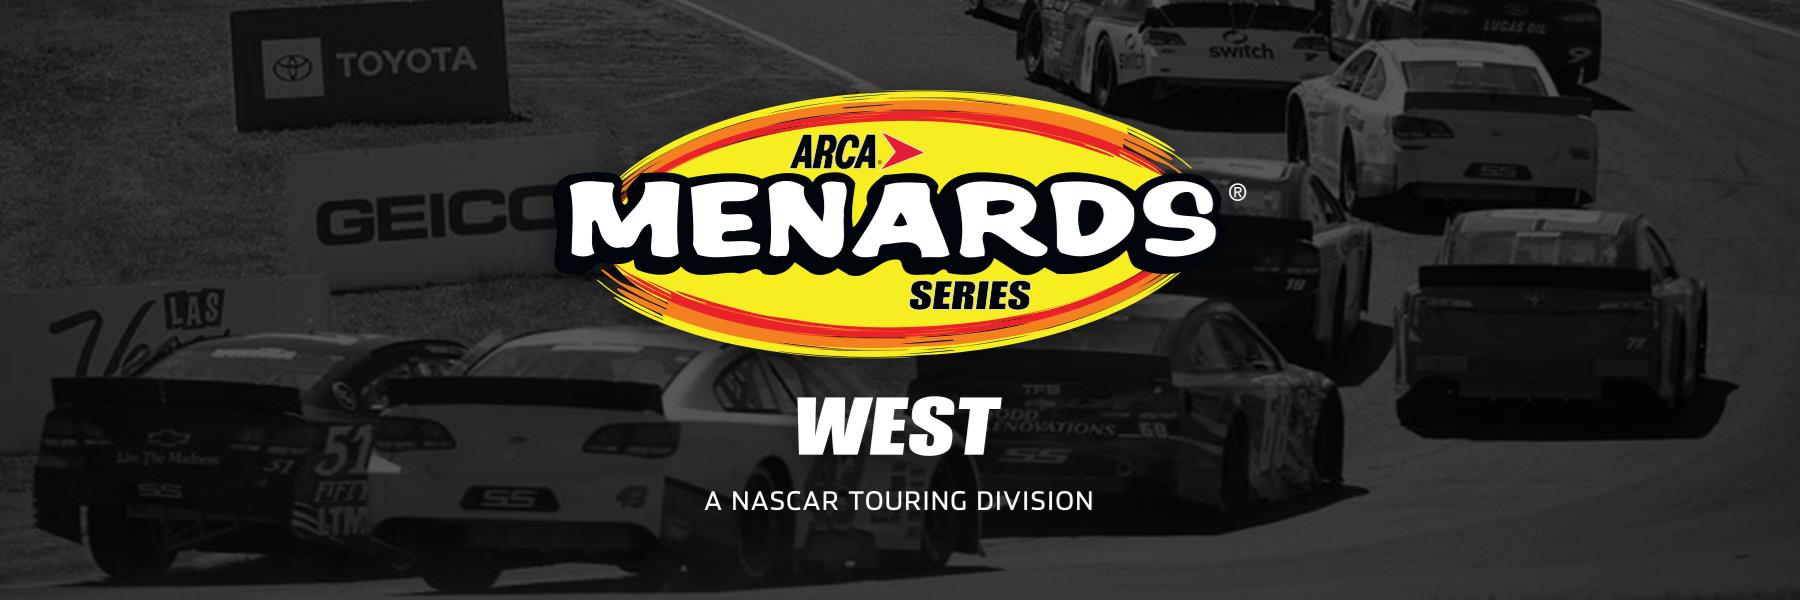 ARCA Menards Series West